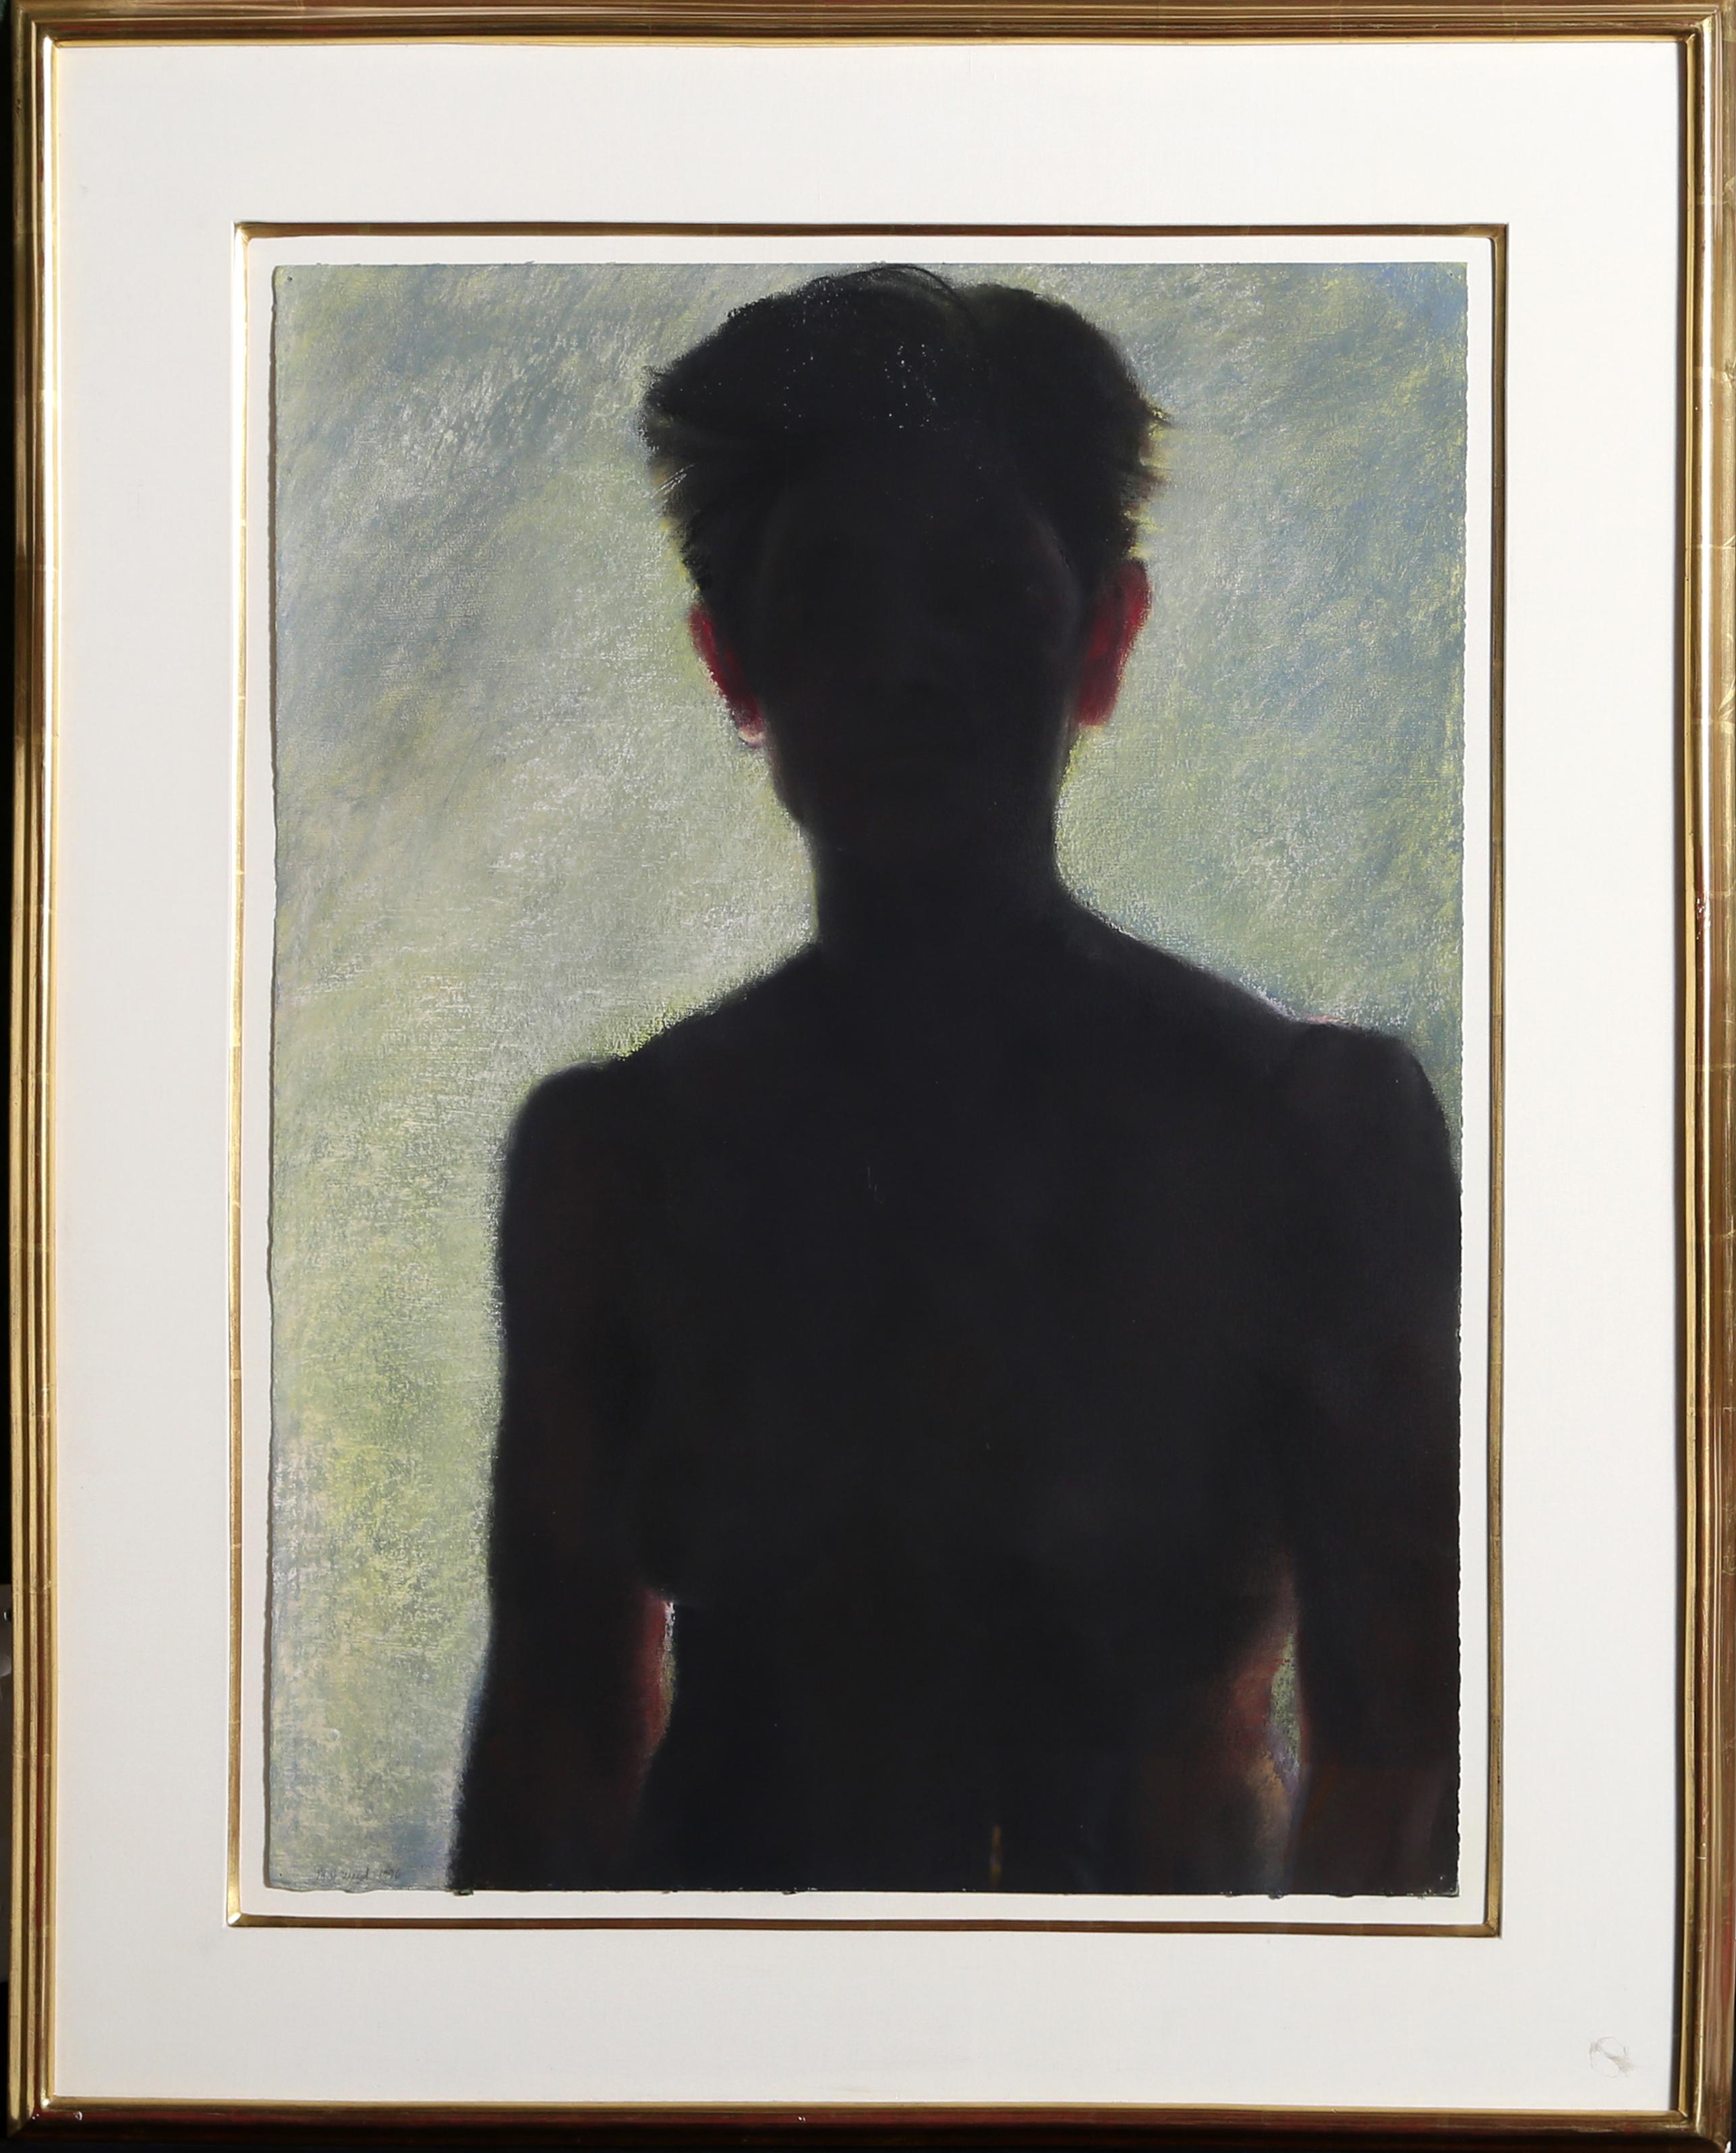 Licht, dahinter
Mary Joan Waid, Amerikanerin (1939)
Datum: 1996
Pastell auf Papier, signiert
Größe: 30 Zoll x 22 Zoll (76,2 cm x 55,88 cm)
Rahmengröße: 40 x 31 Zoll